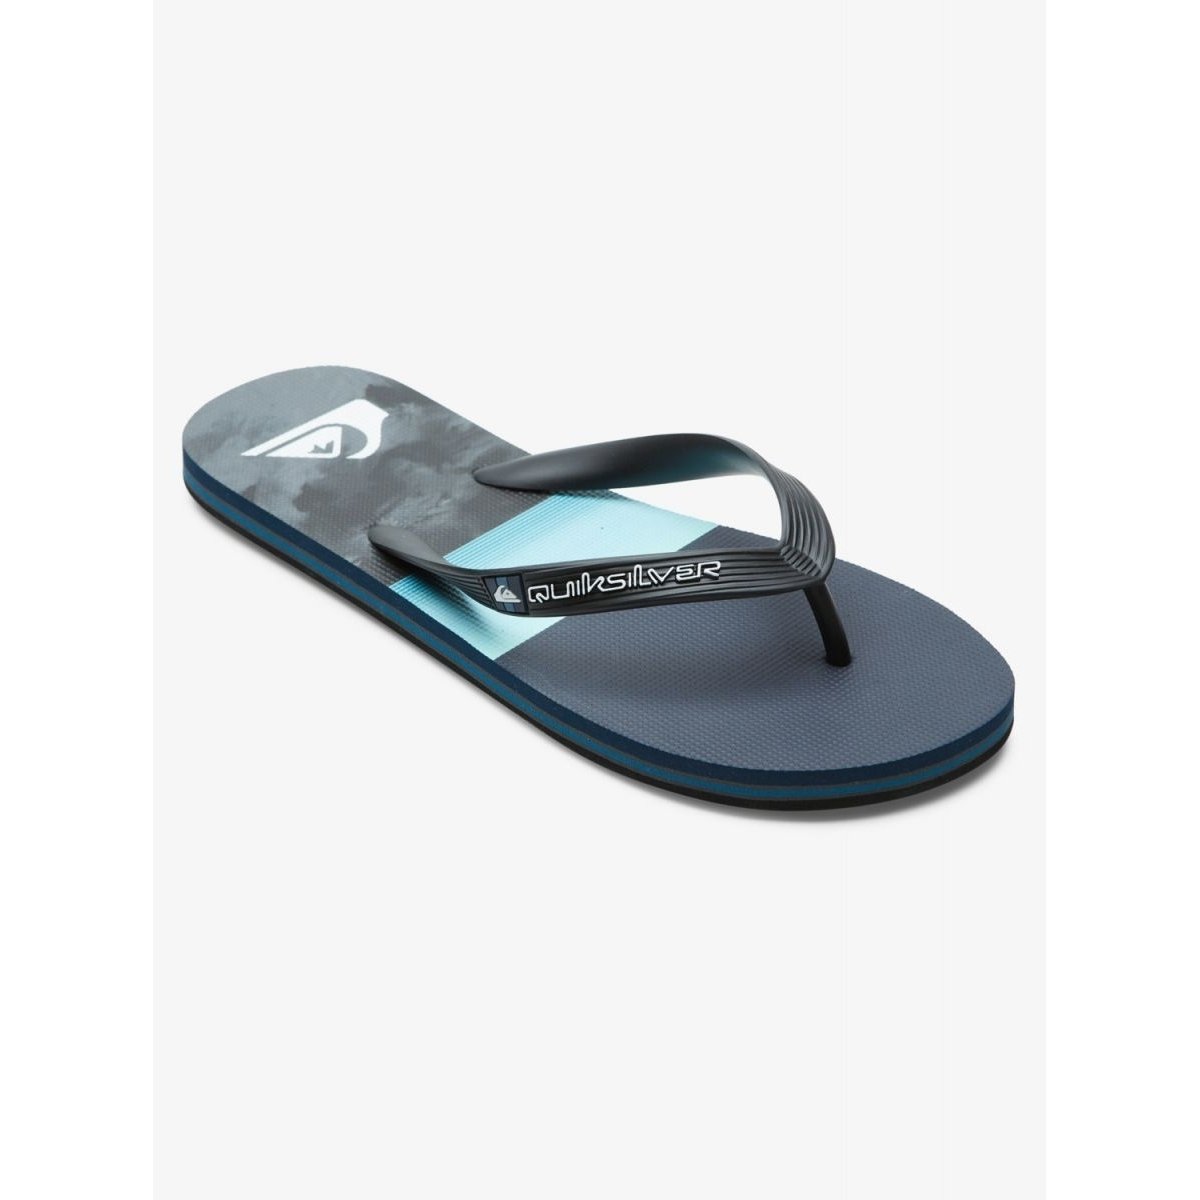 Quiksilver Men's Molokai Panel Flip Flop Sandals - AQYL101263-XBBS BLUE/BLUE/GREY - BLUE/BLUE/GREY, 12